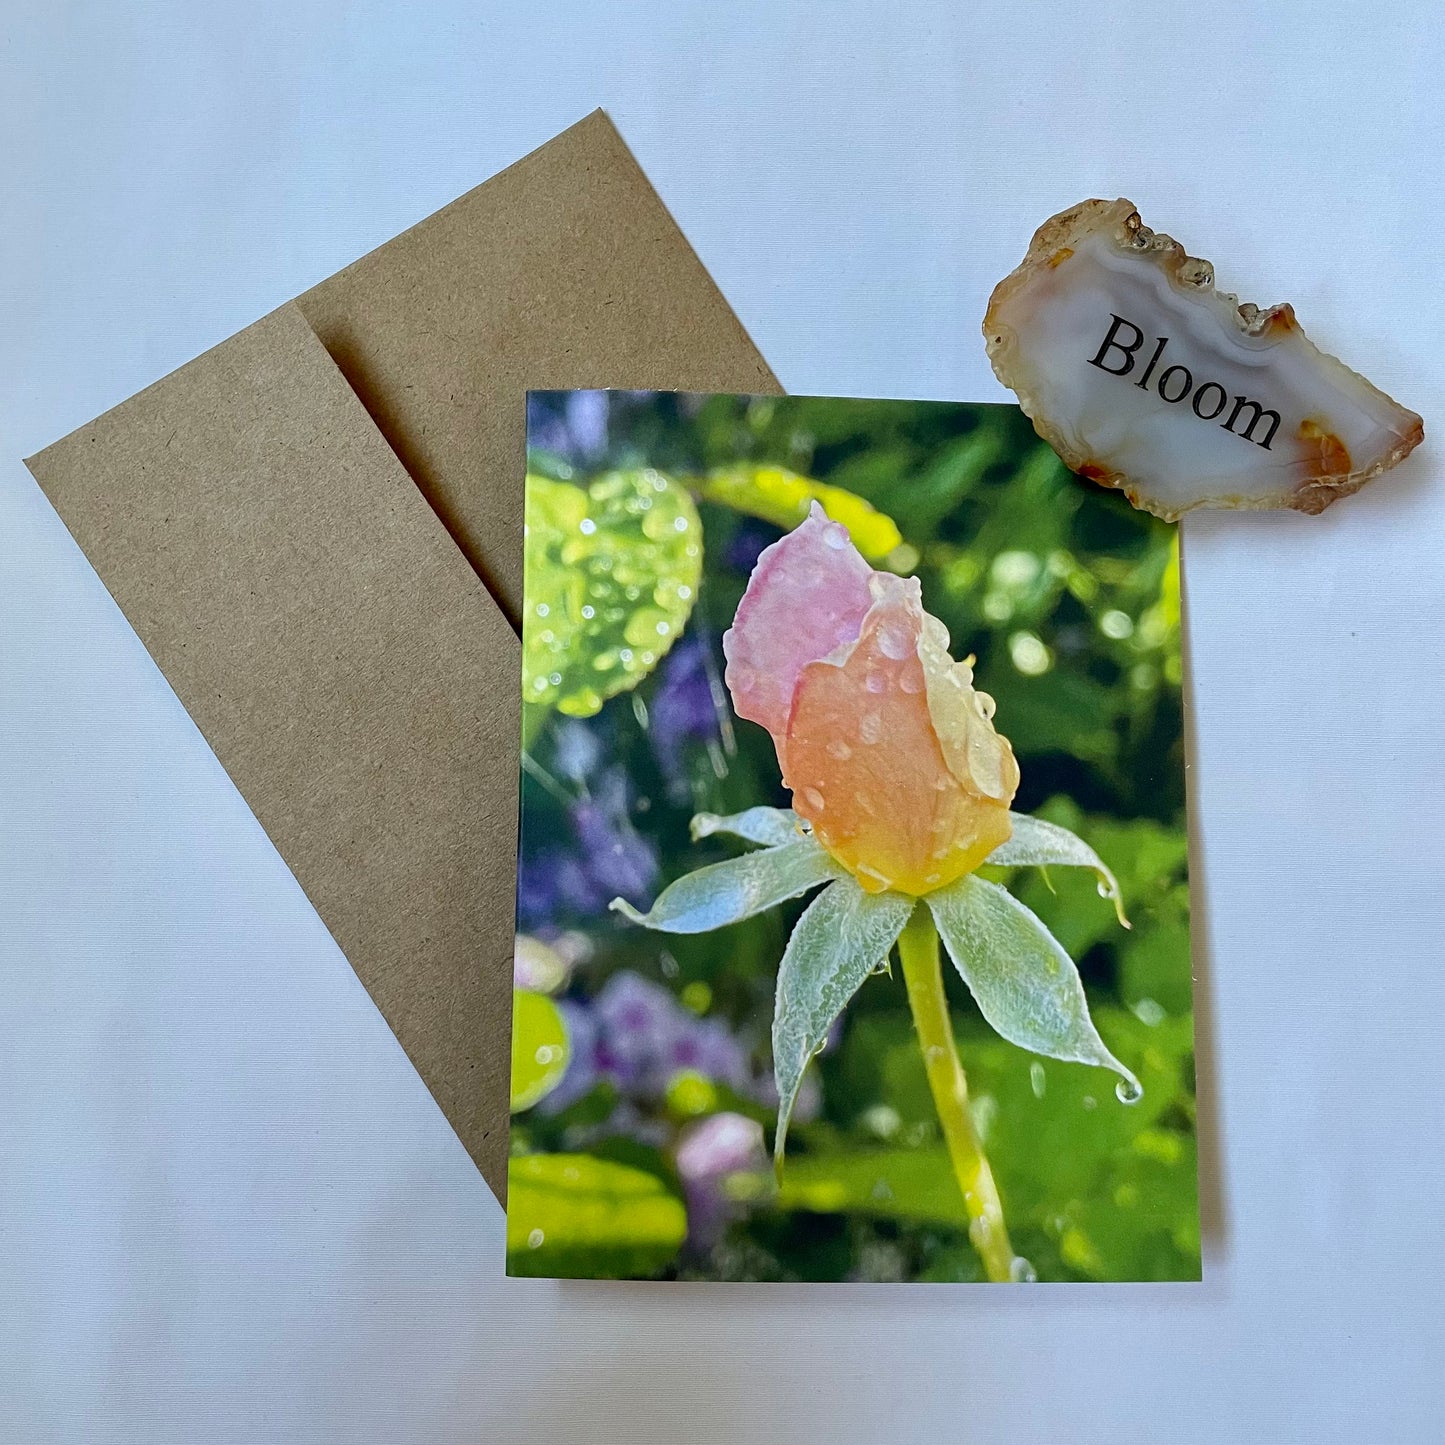 Sorbet Delight and Sunburst Roses Original Photography Greeting Card with Kraft Envelope(s)